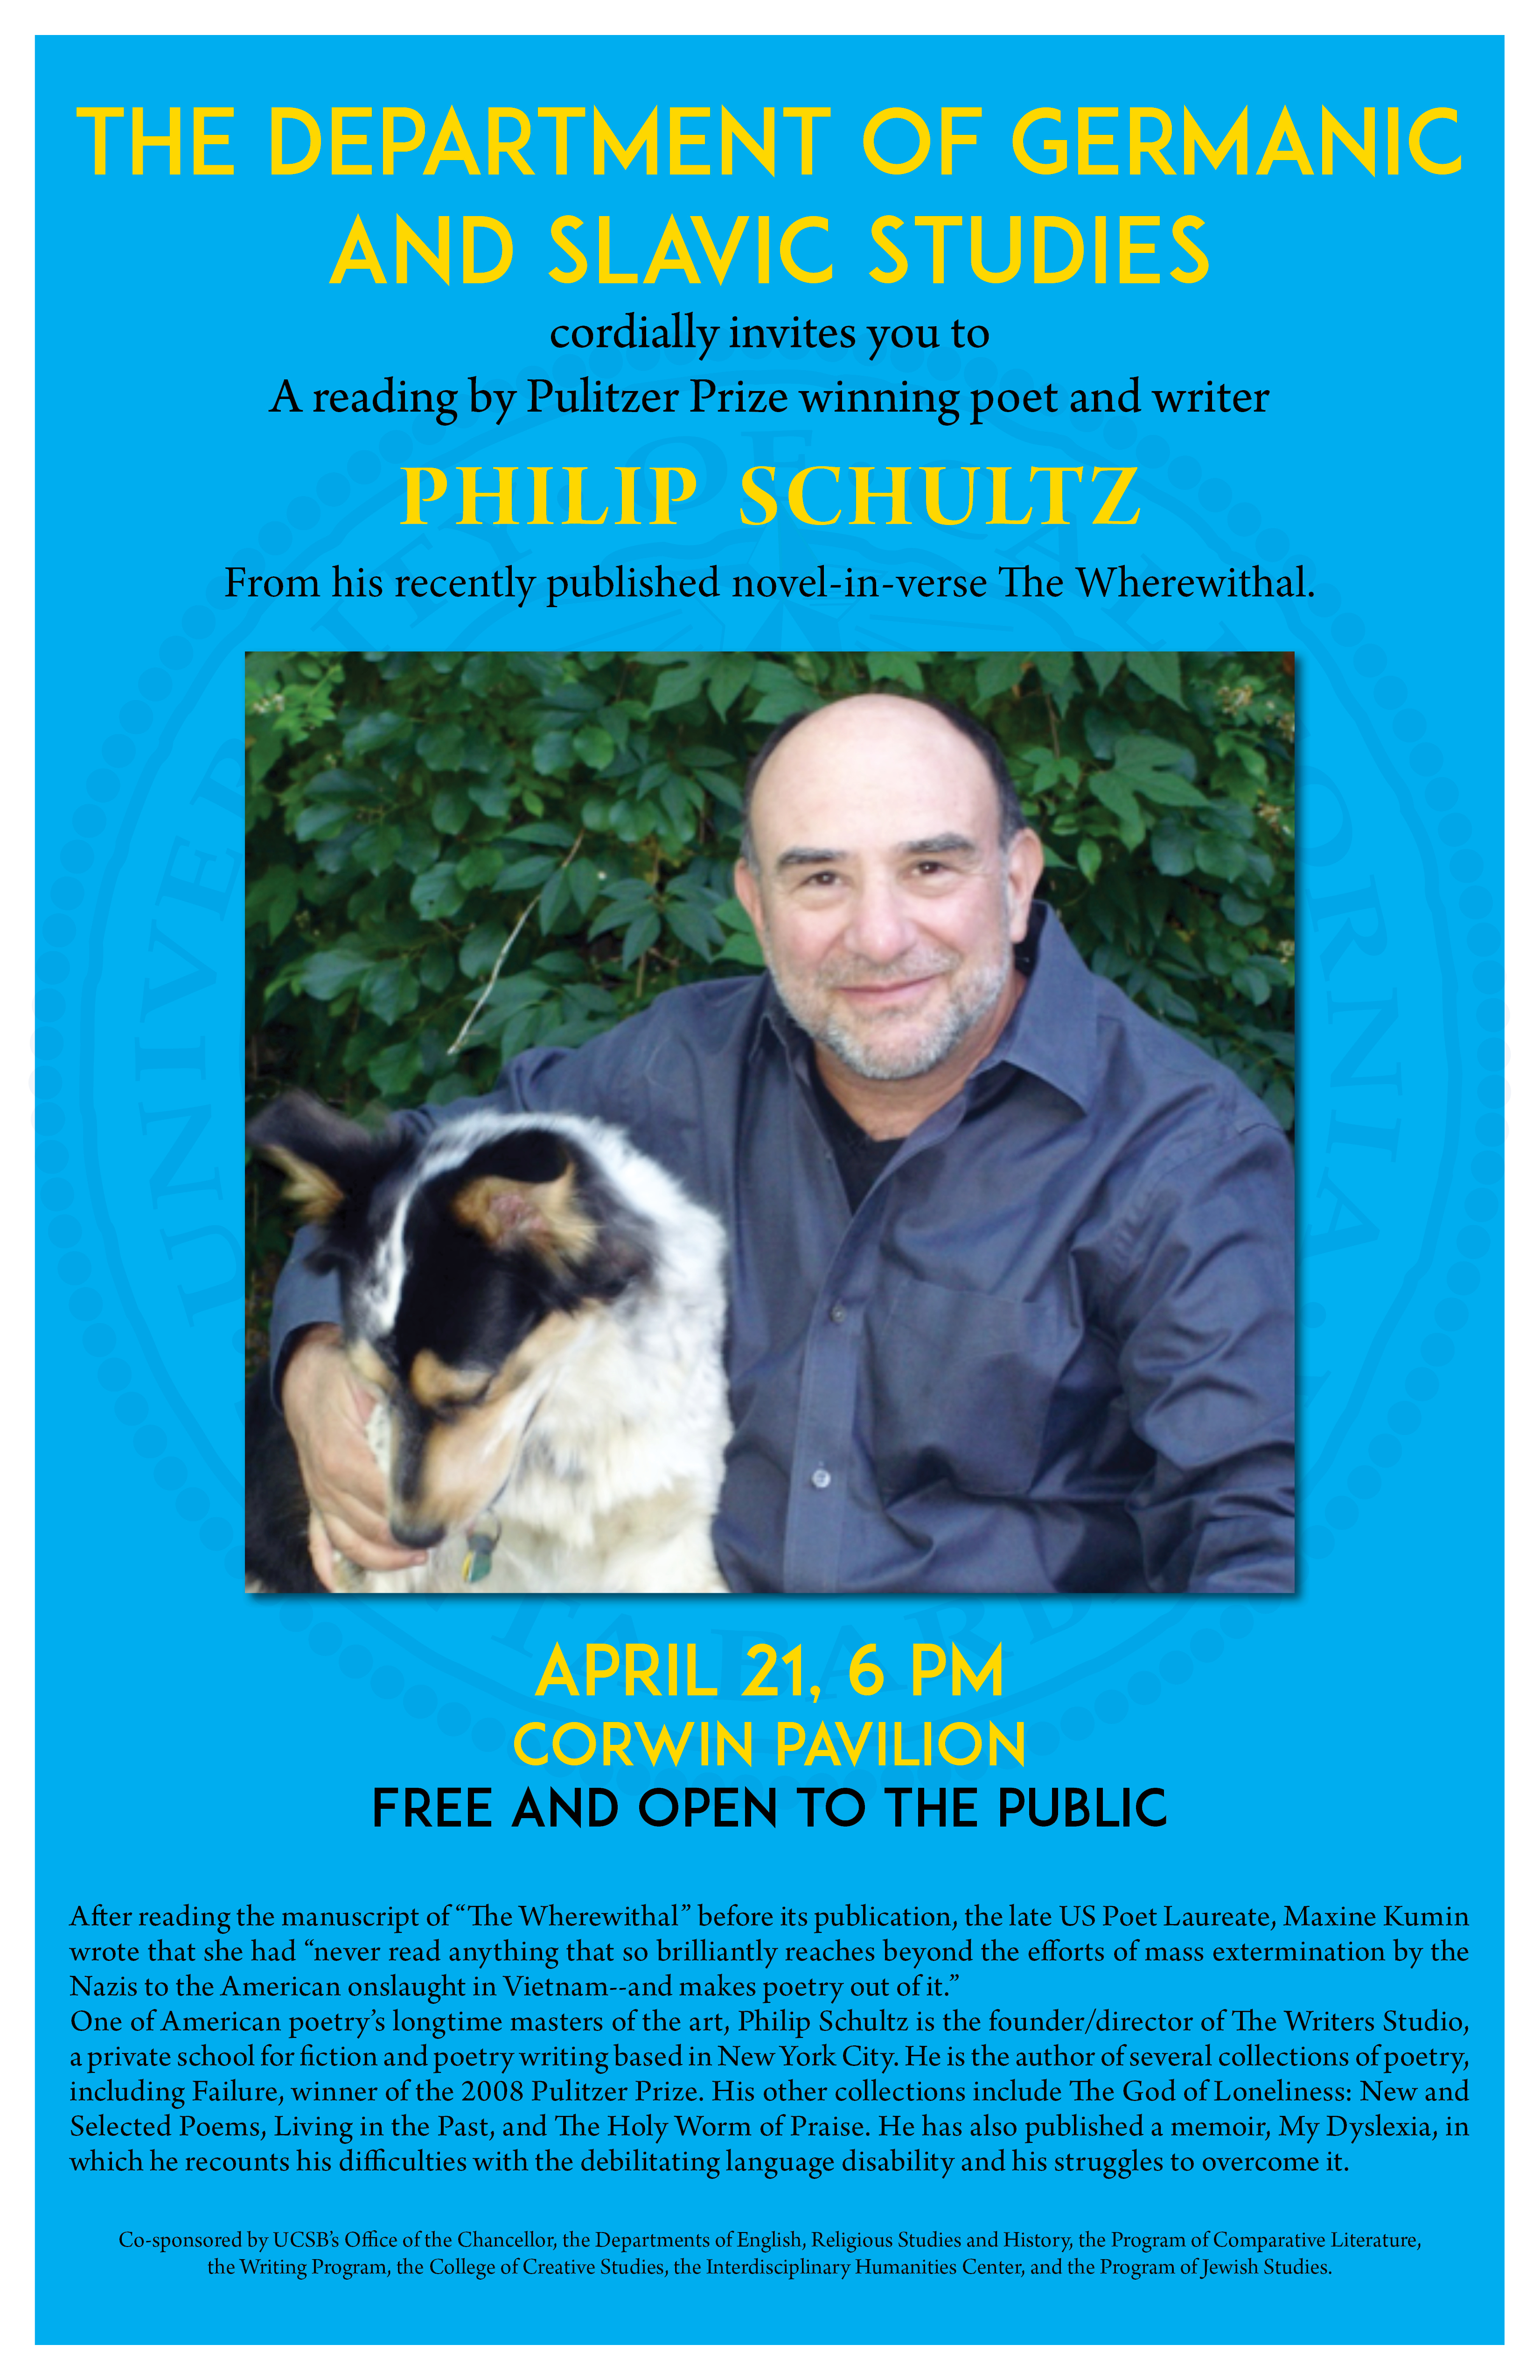 Reading by Pulitzer Prize-winning poet Philip Schultz